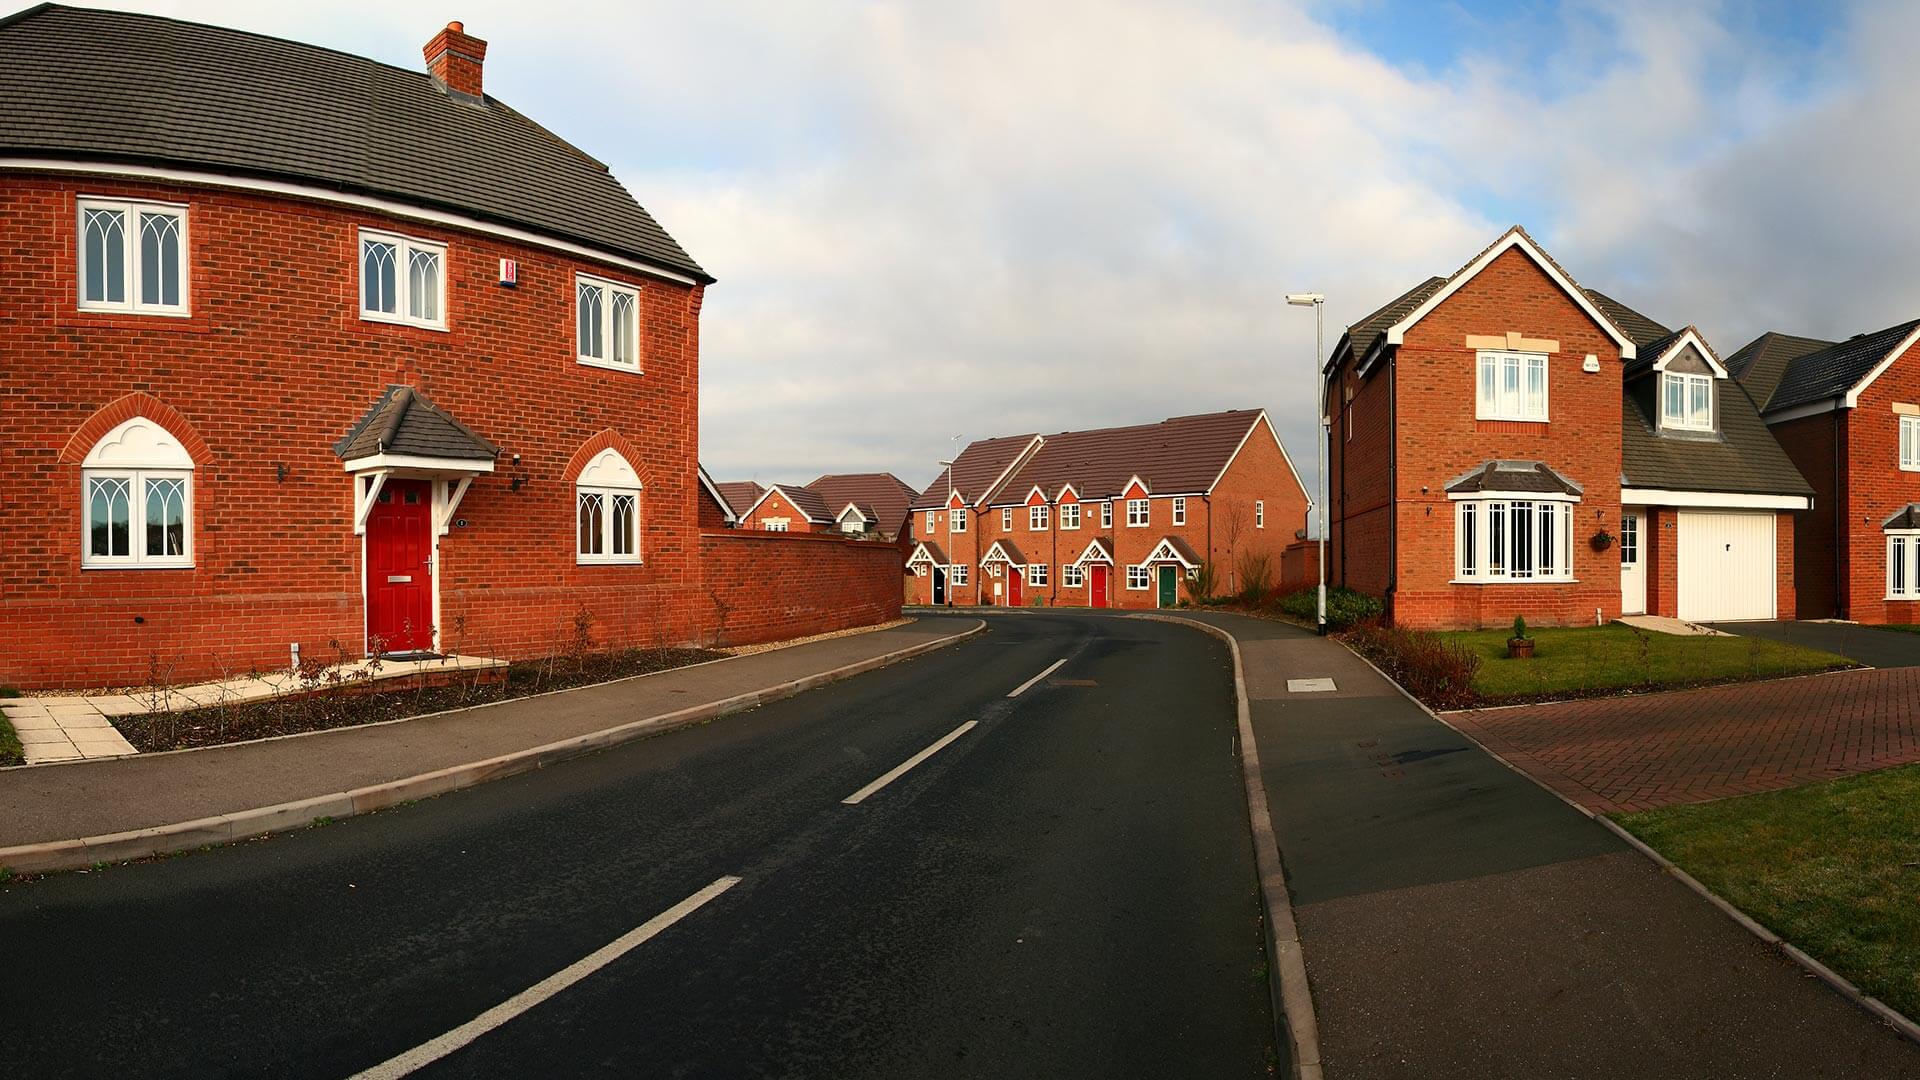 Houses along a street